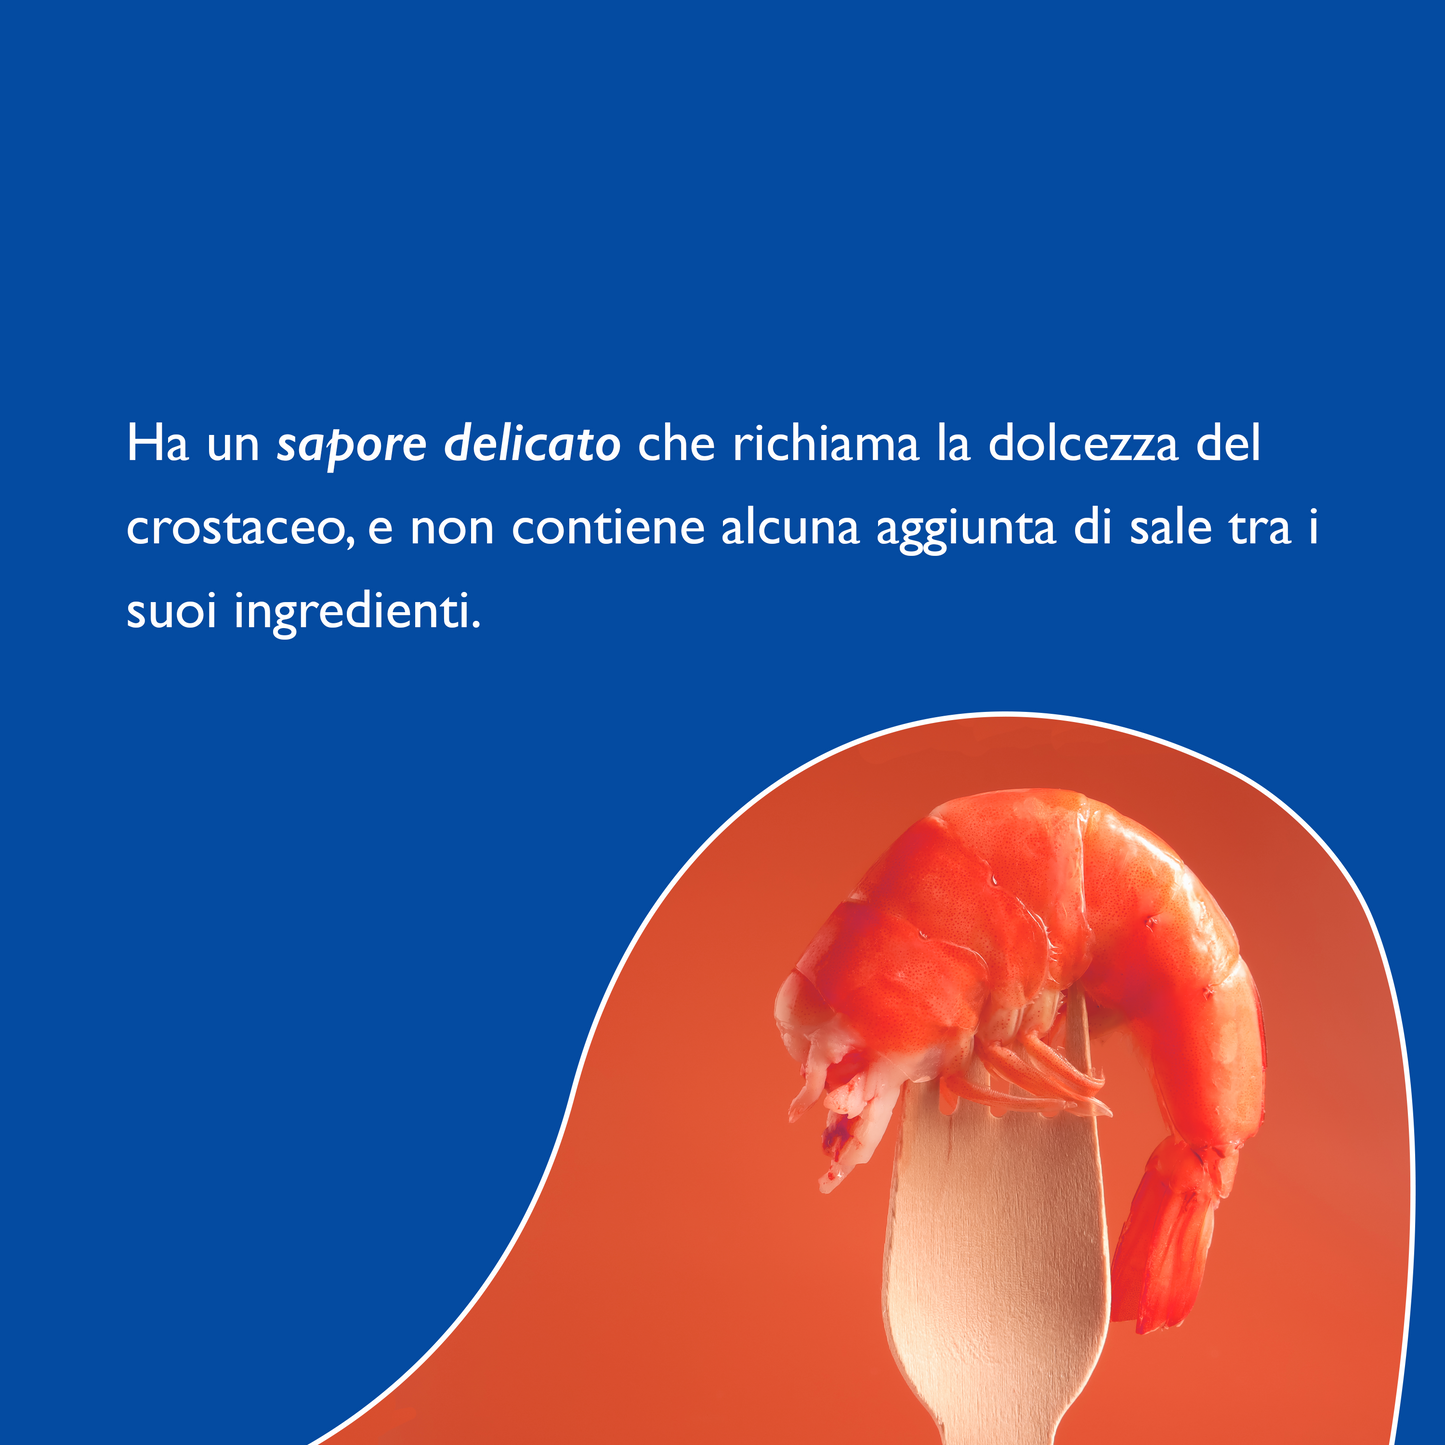 Gambero Rosso® sauce from Mazara del Vallo - Shrimp sauce